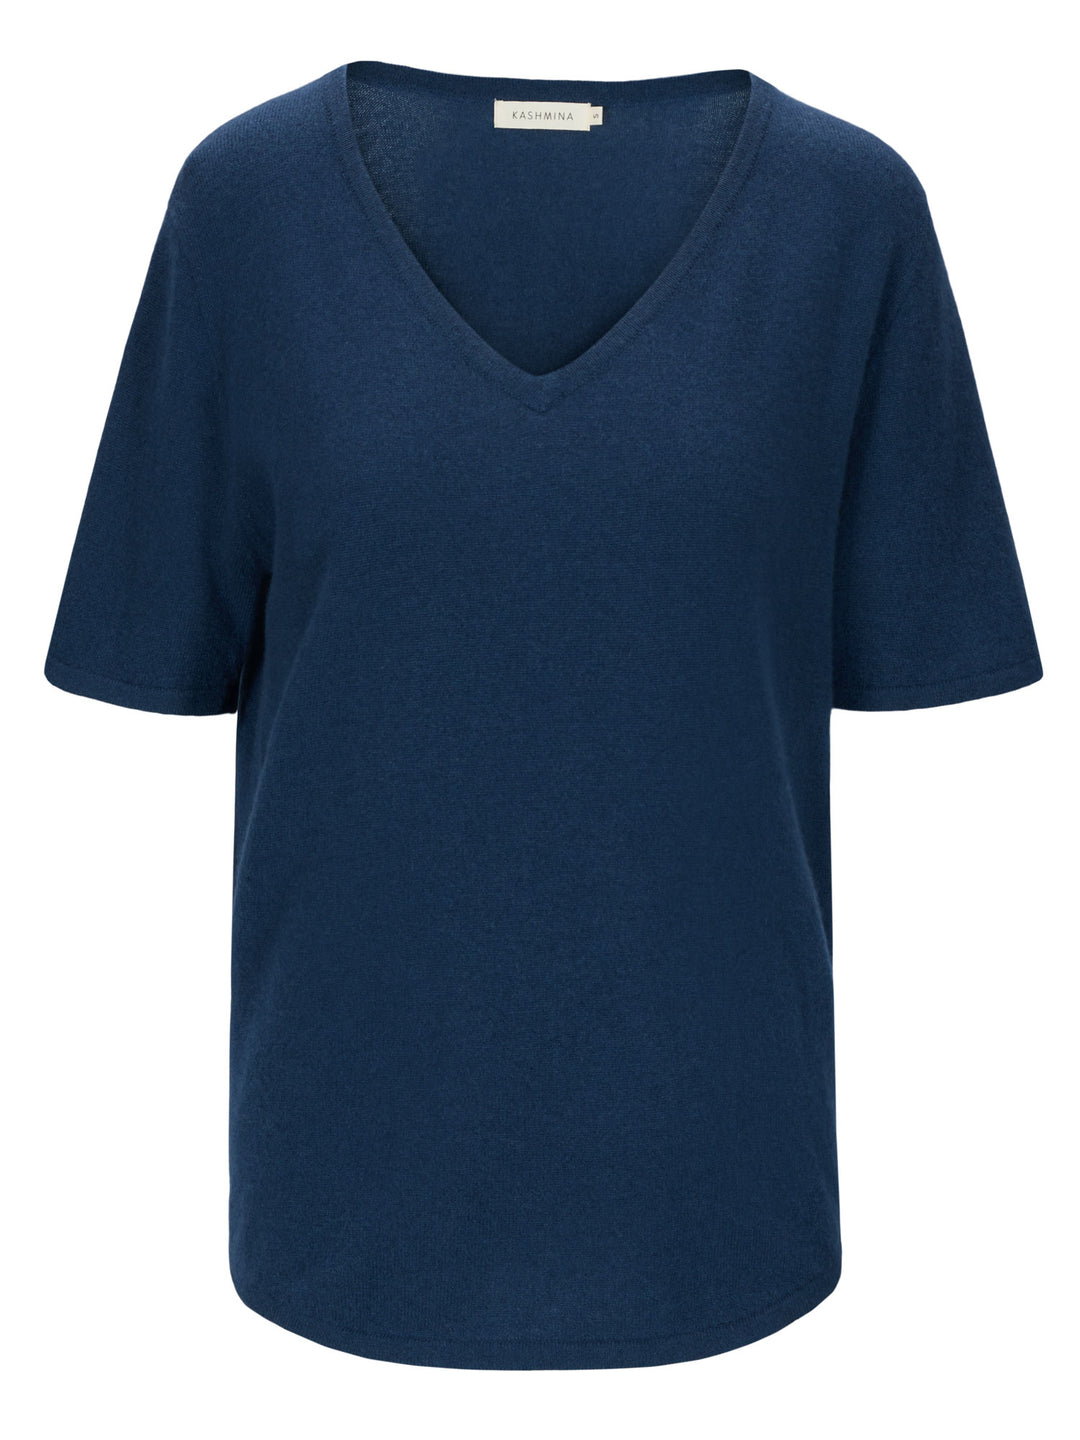 Cashmere T-shirt "Iben" 100% cashmere from Kashmina. Mountain Blue.